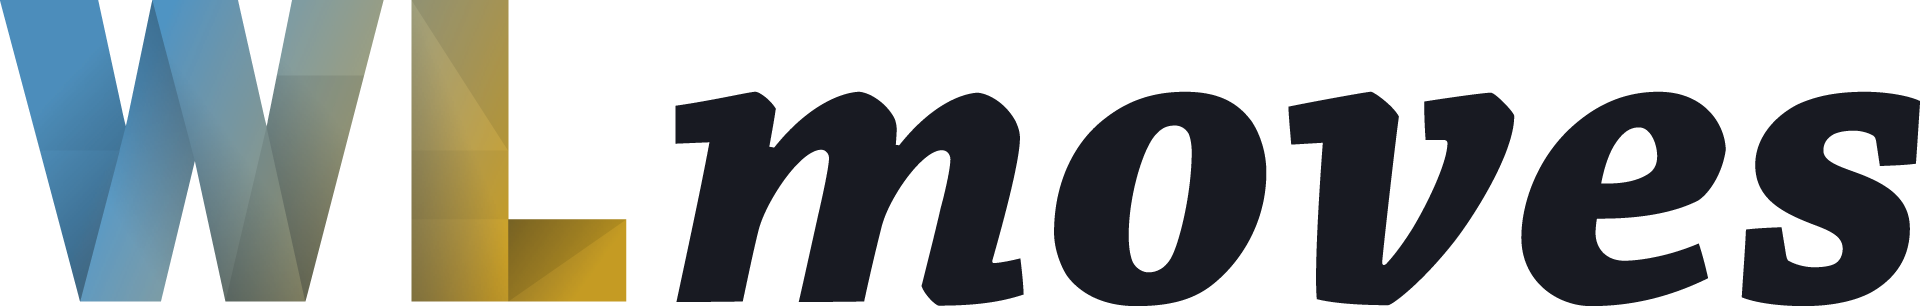 WL-moves-logo